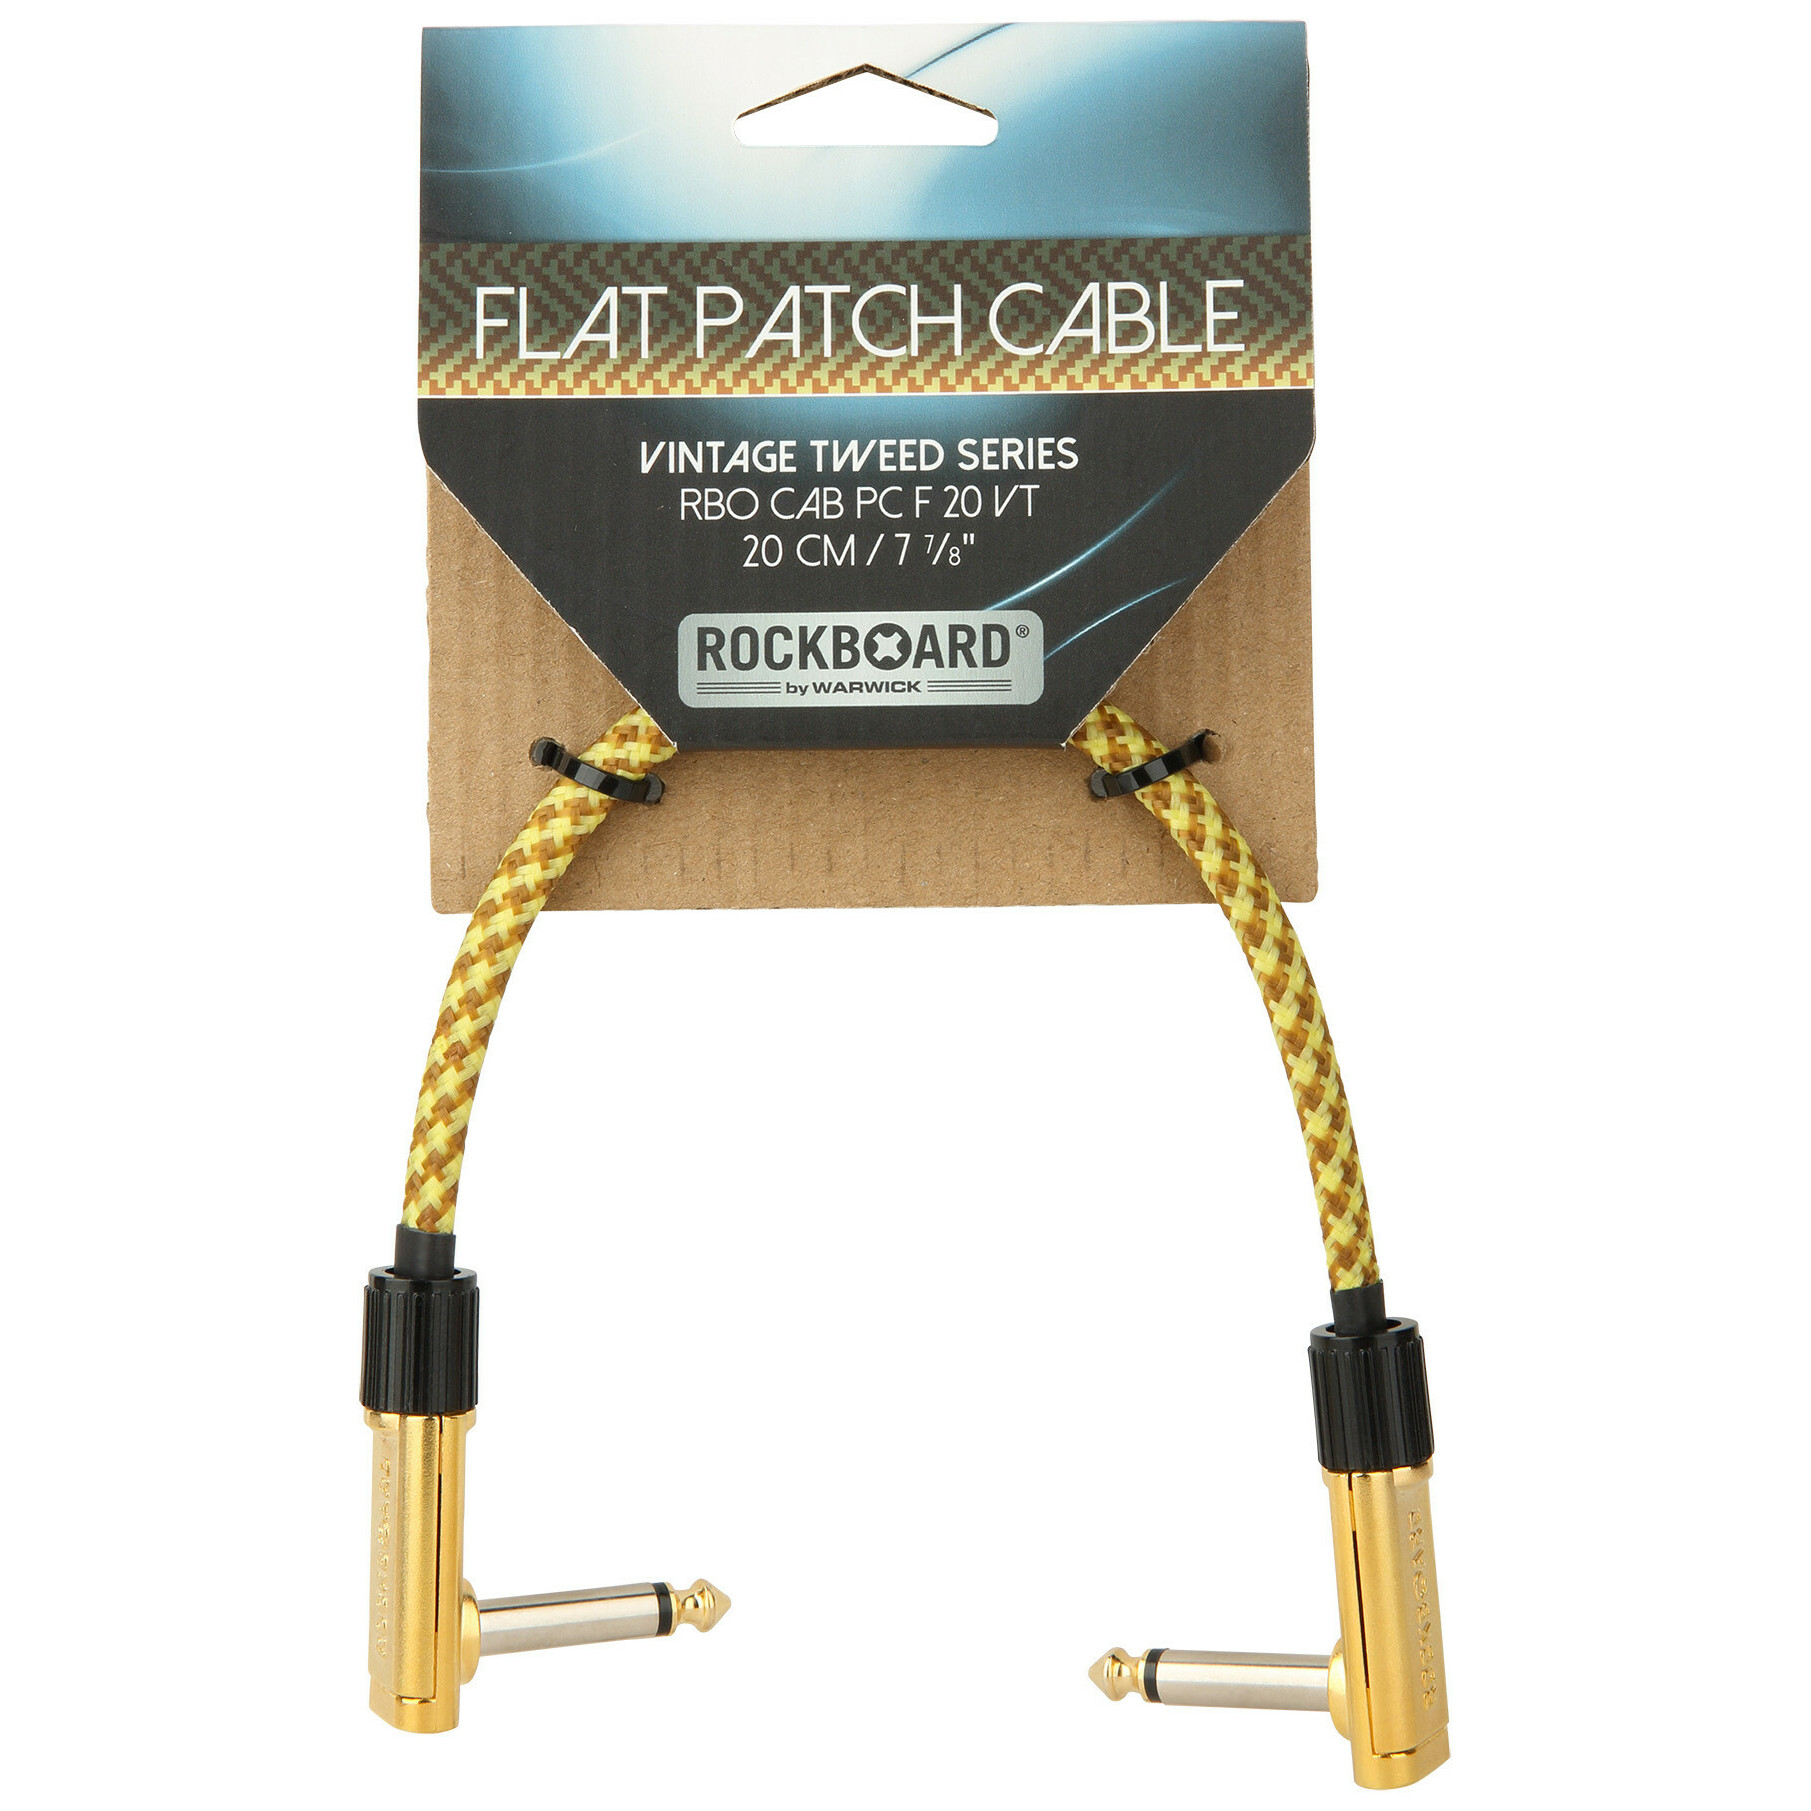 RockBoard Flat Patch Cable Vintage Tweed 20 cm 3